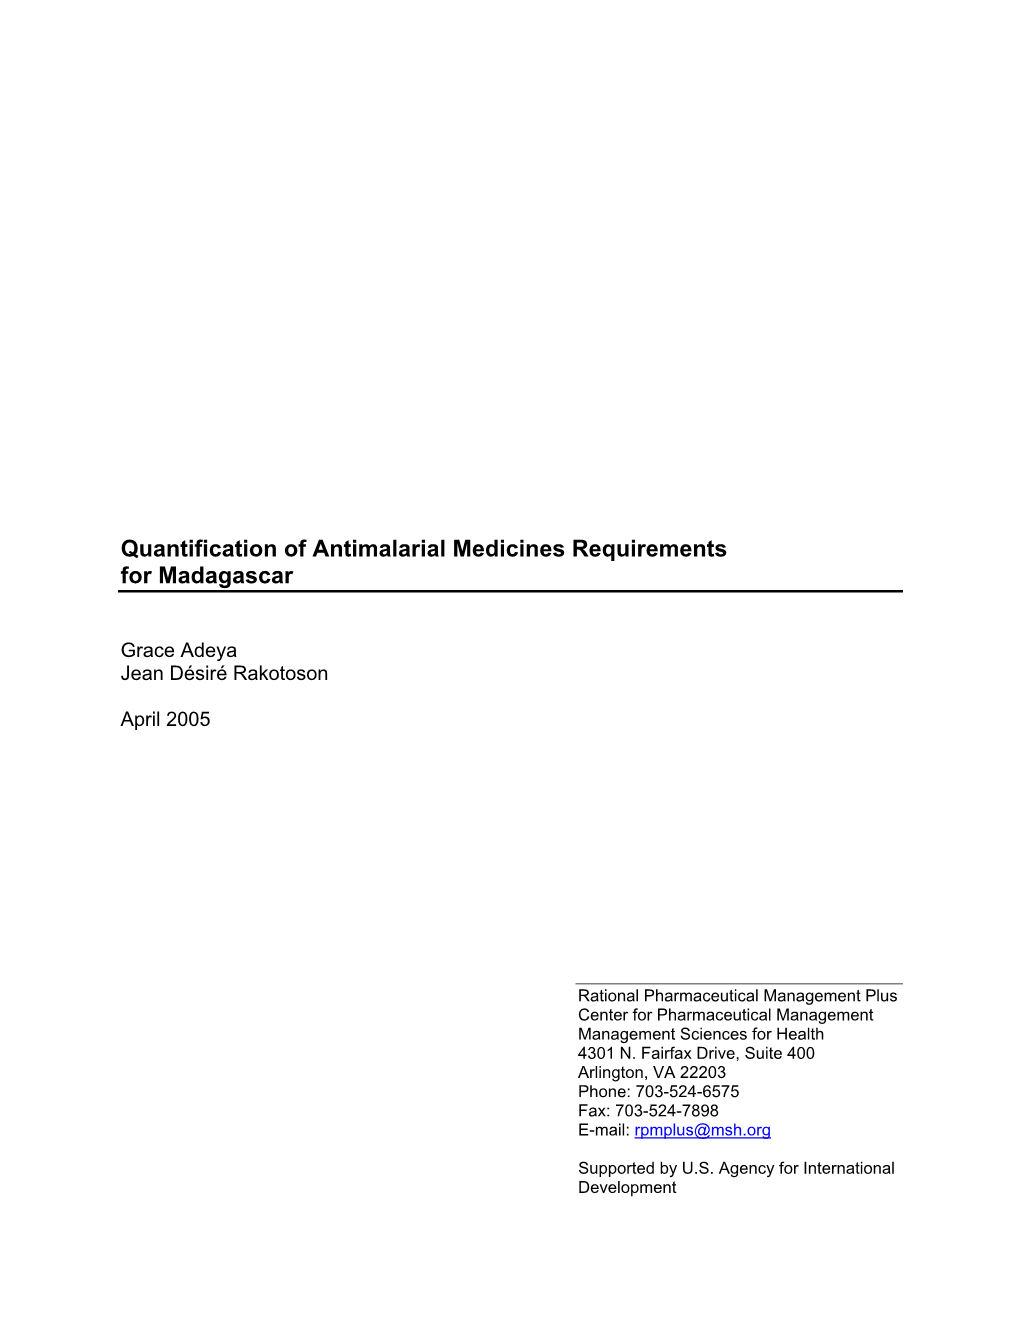 Quantification of Antimalarial Medicines Requirements for Madagascar